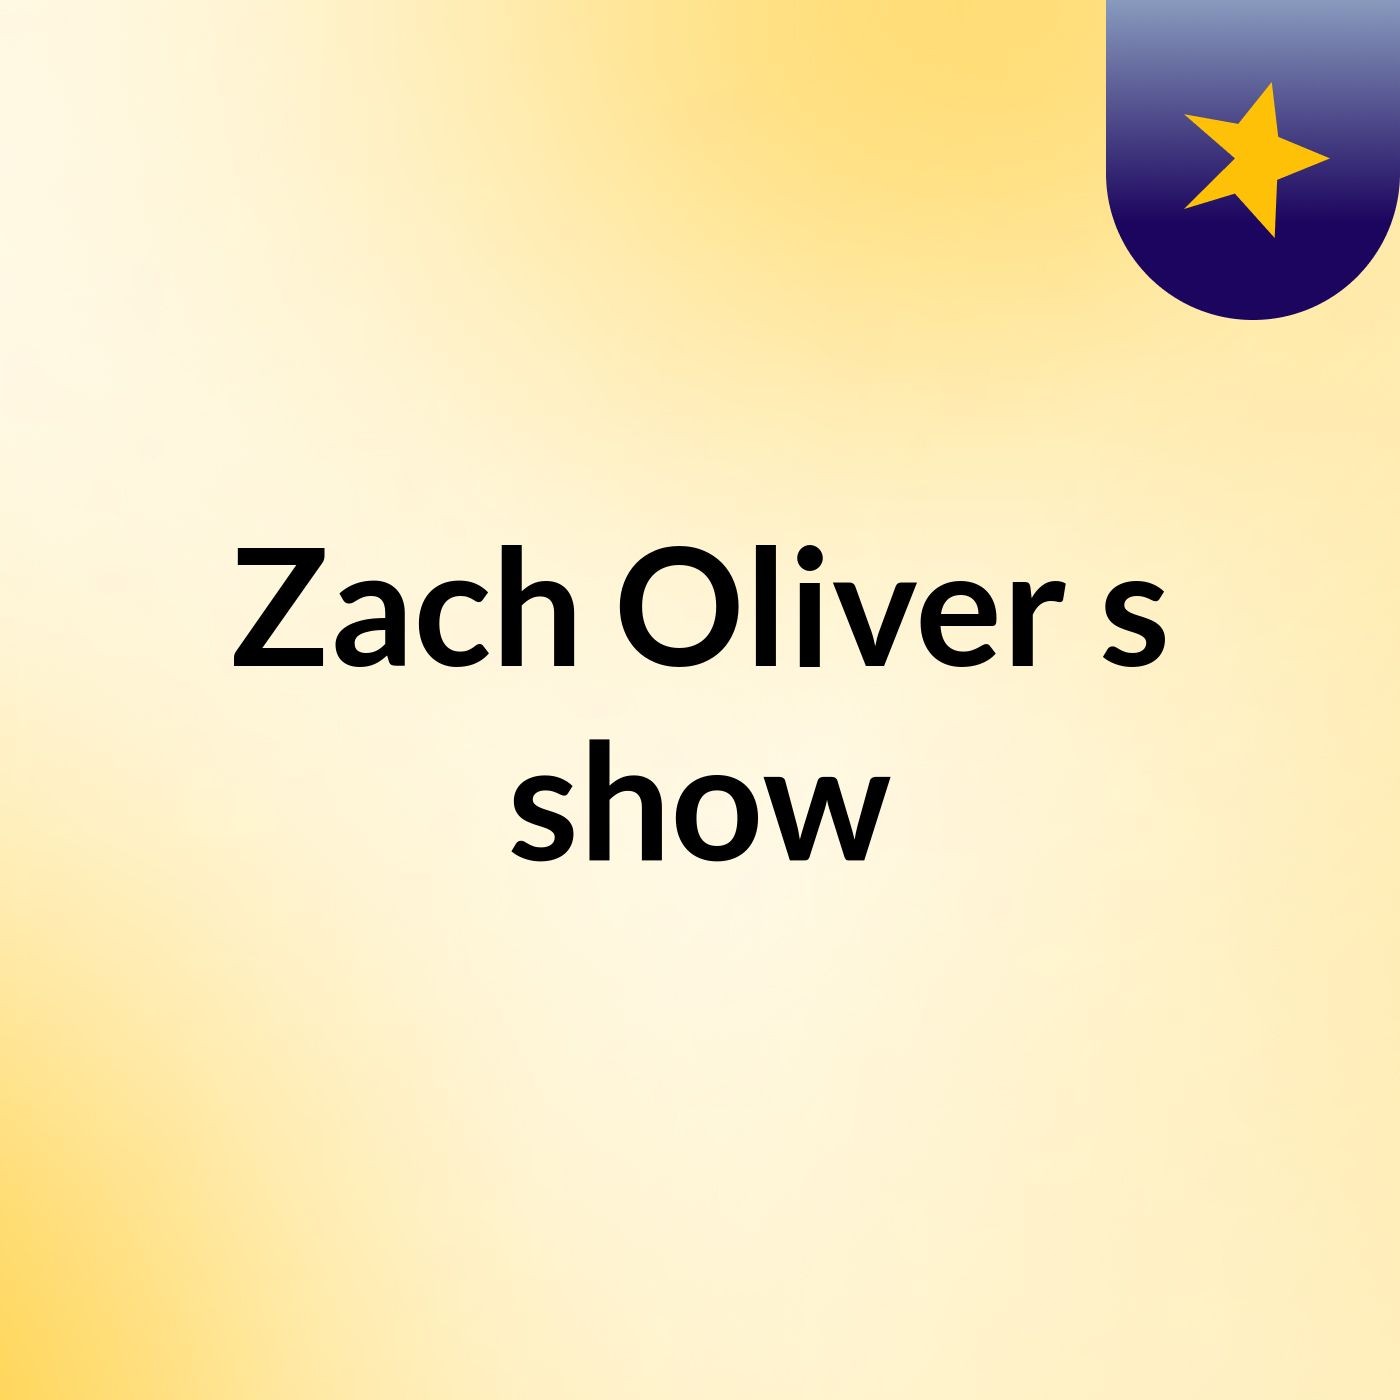 Zach Oliver's show